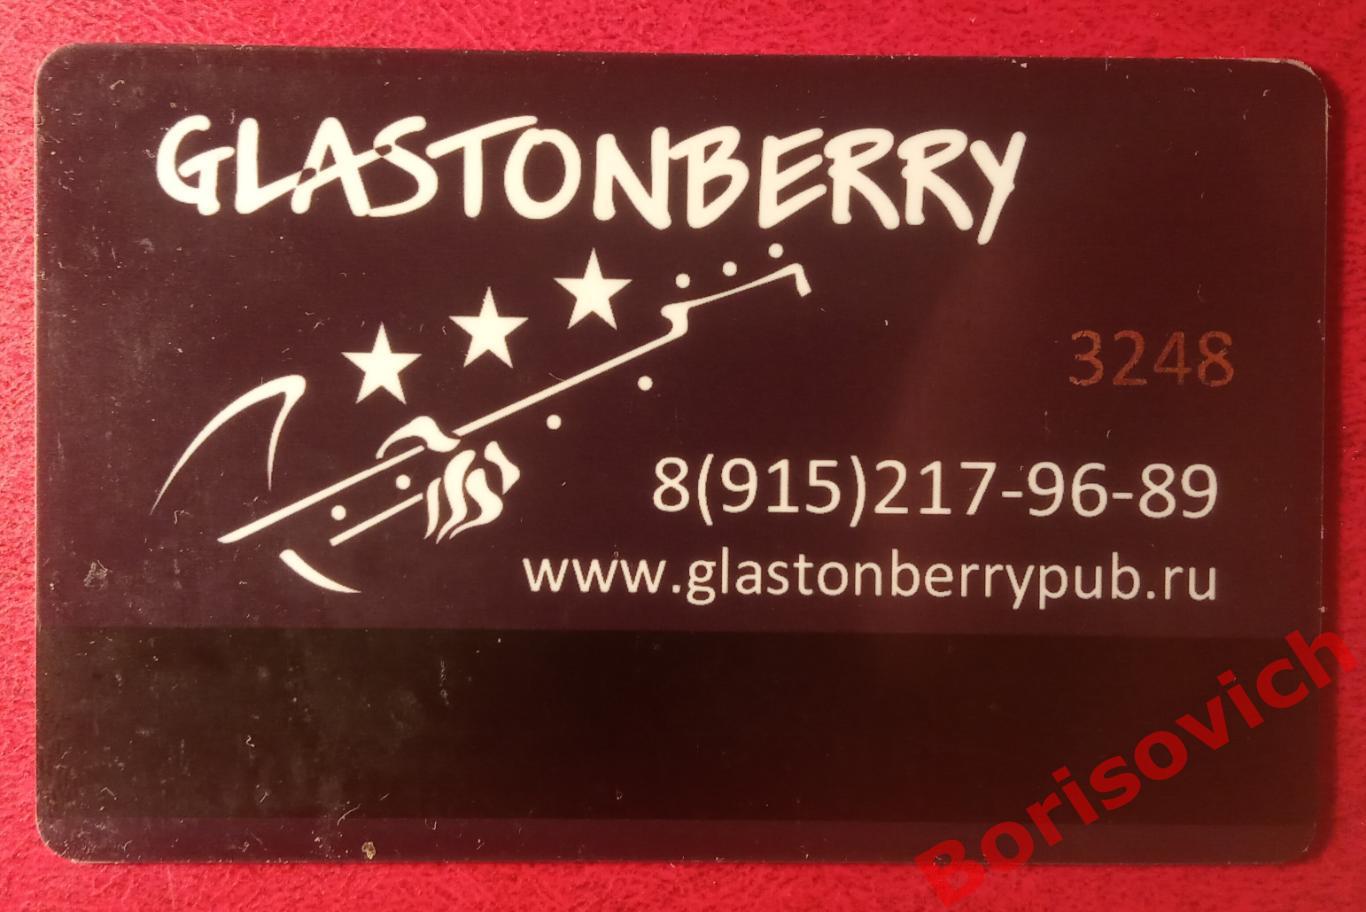 Музыкальный клуб Glastonberry 1